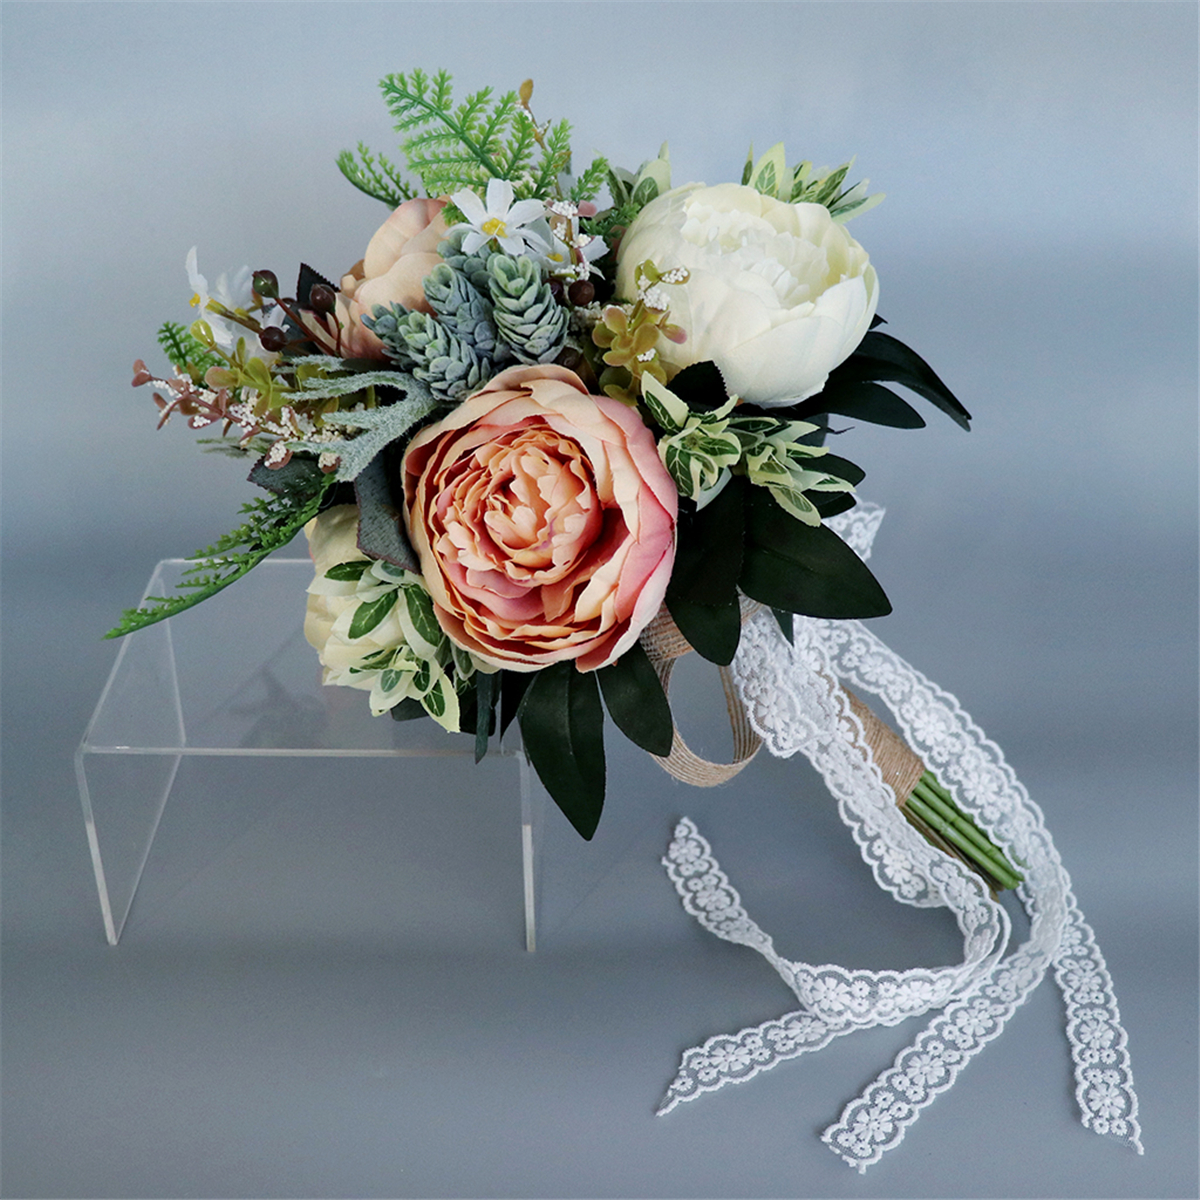 Wedding-Bridal-Bouquets-Handmade-Artificial-Flowers-Decorations-Bride-Accessories-1643090-12